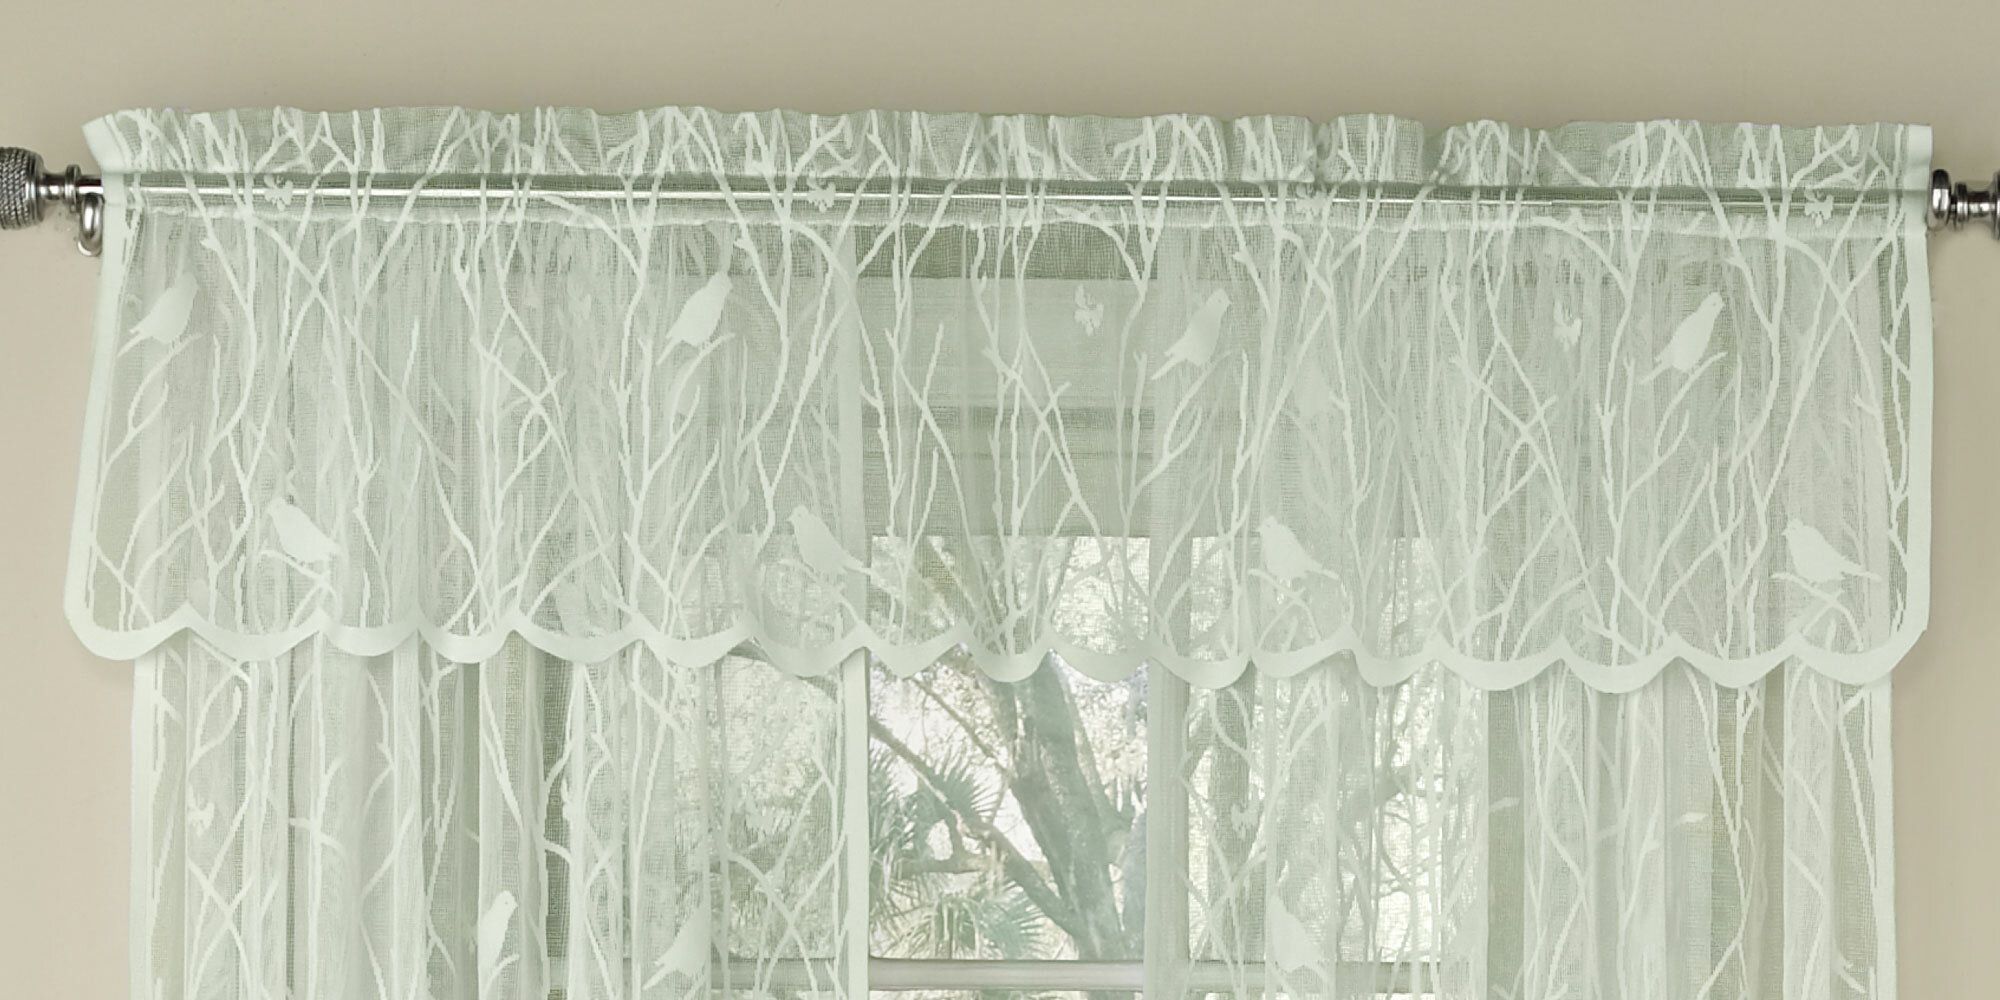 Nardi Knit Lace Song Bird Motif 56" Window Valance With White Knit Lace Bird Motif Window Curtain Tiers (Photo 11 of 20)